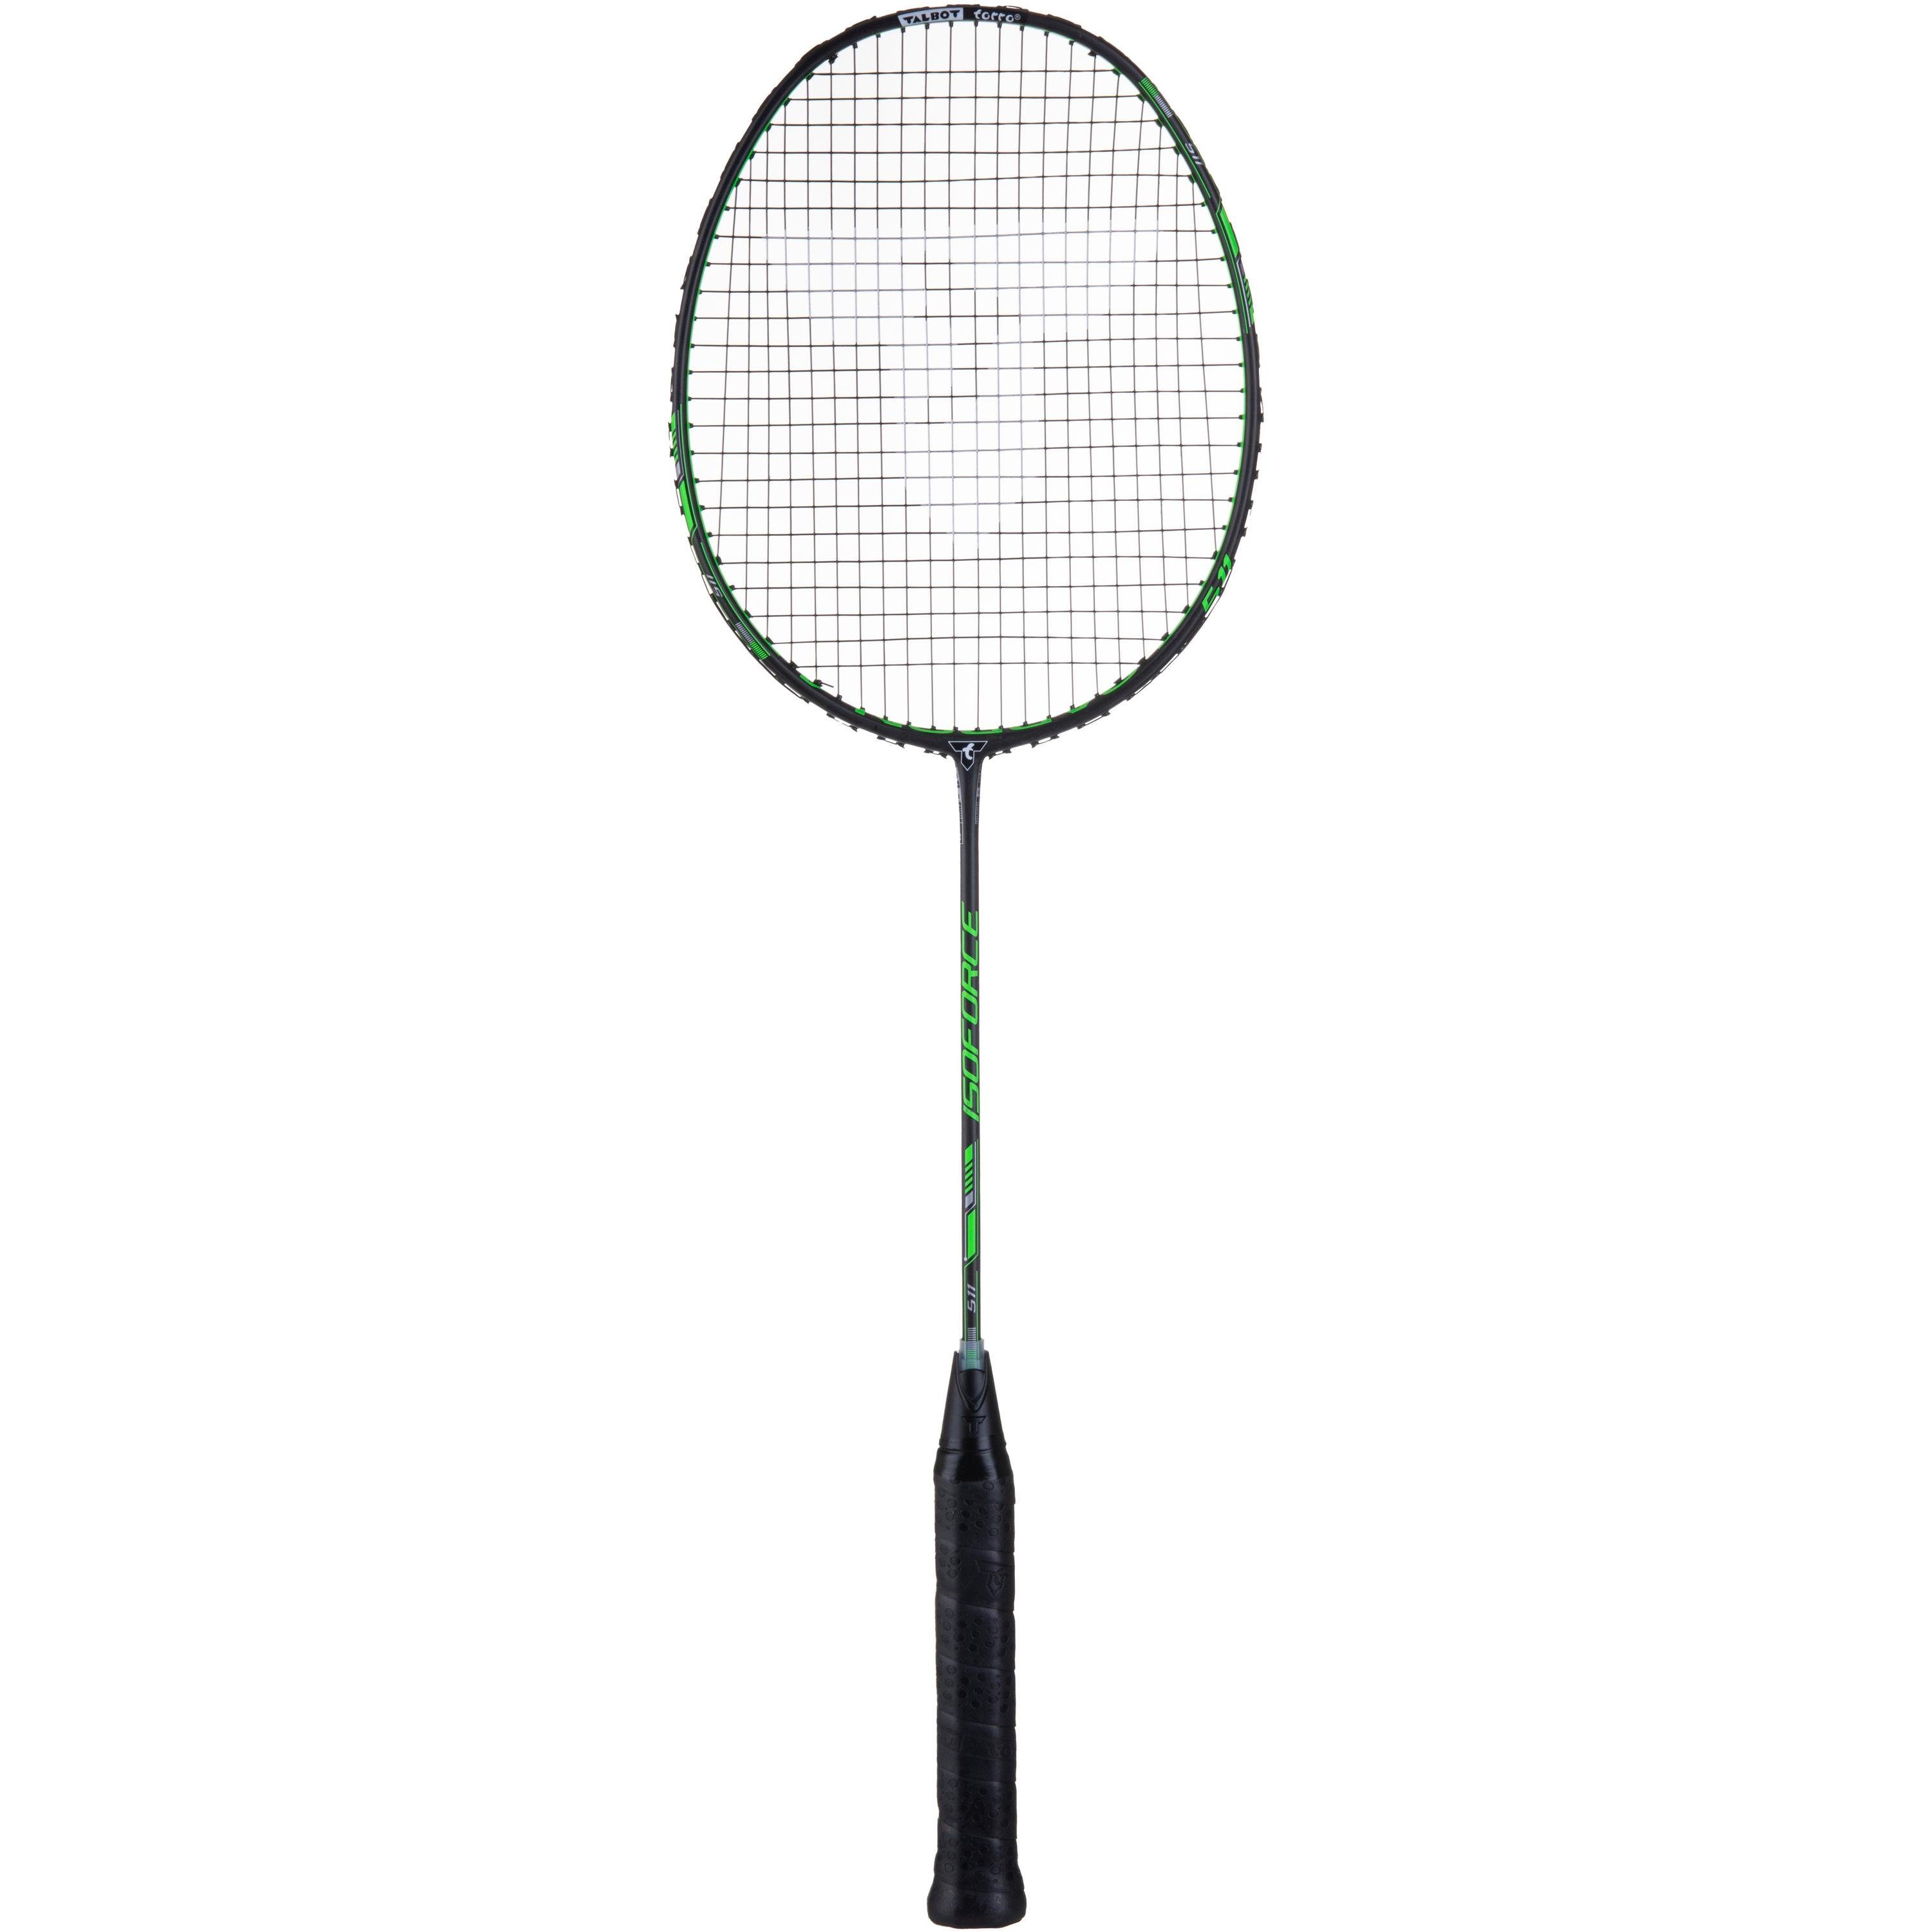 ISOFORCE Badmintonschläger Talbot-Torro 511